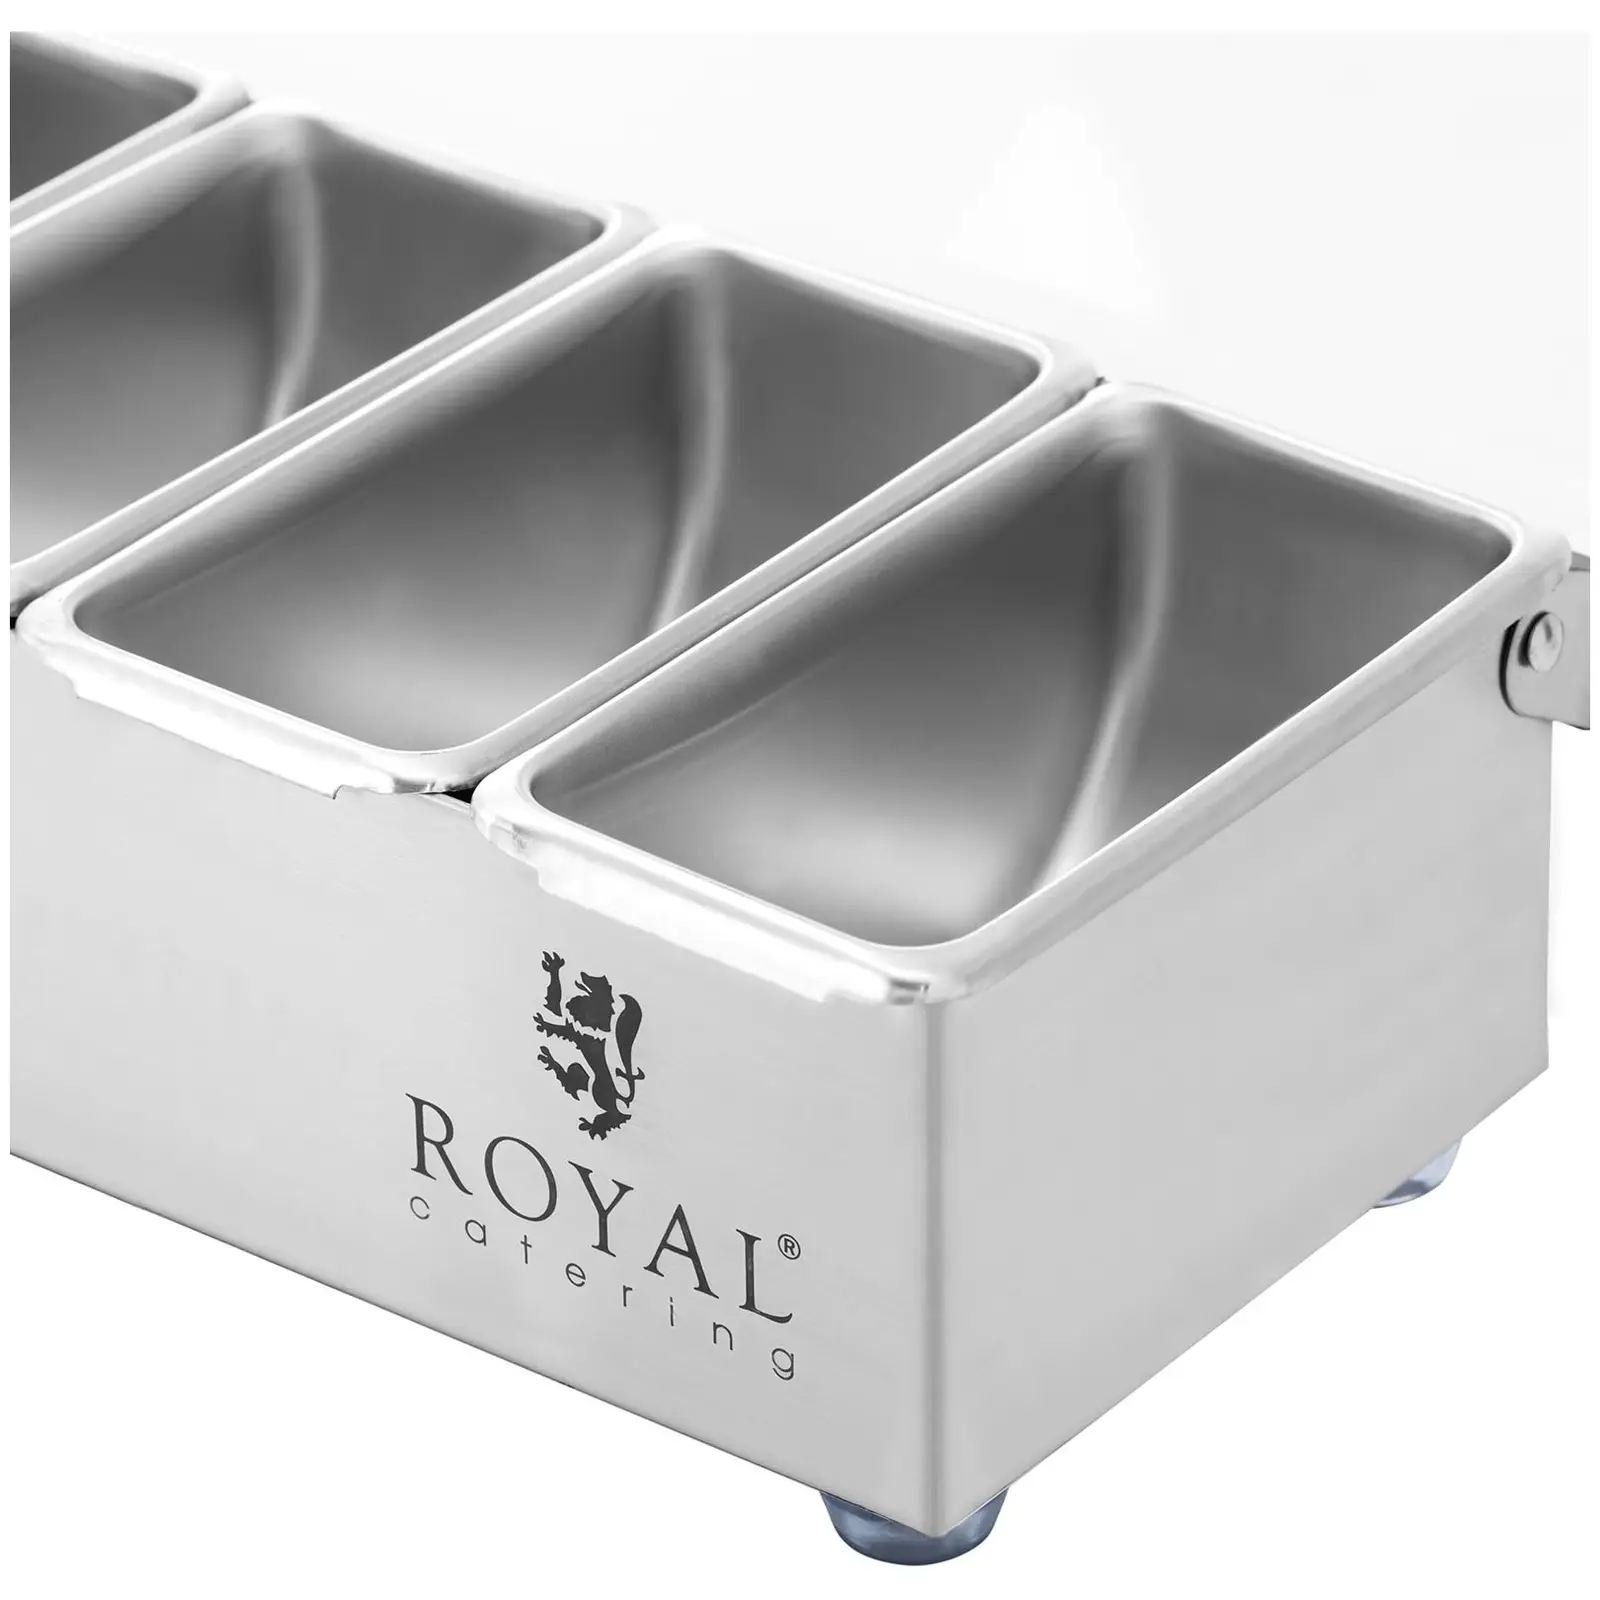 Ingrediensbehållare - Rostfritt stål - 4 x 0,4 L - Royal Catering